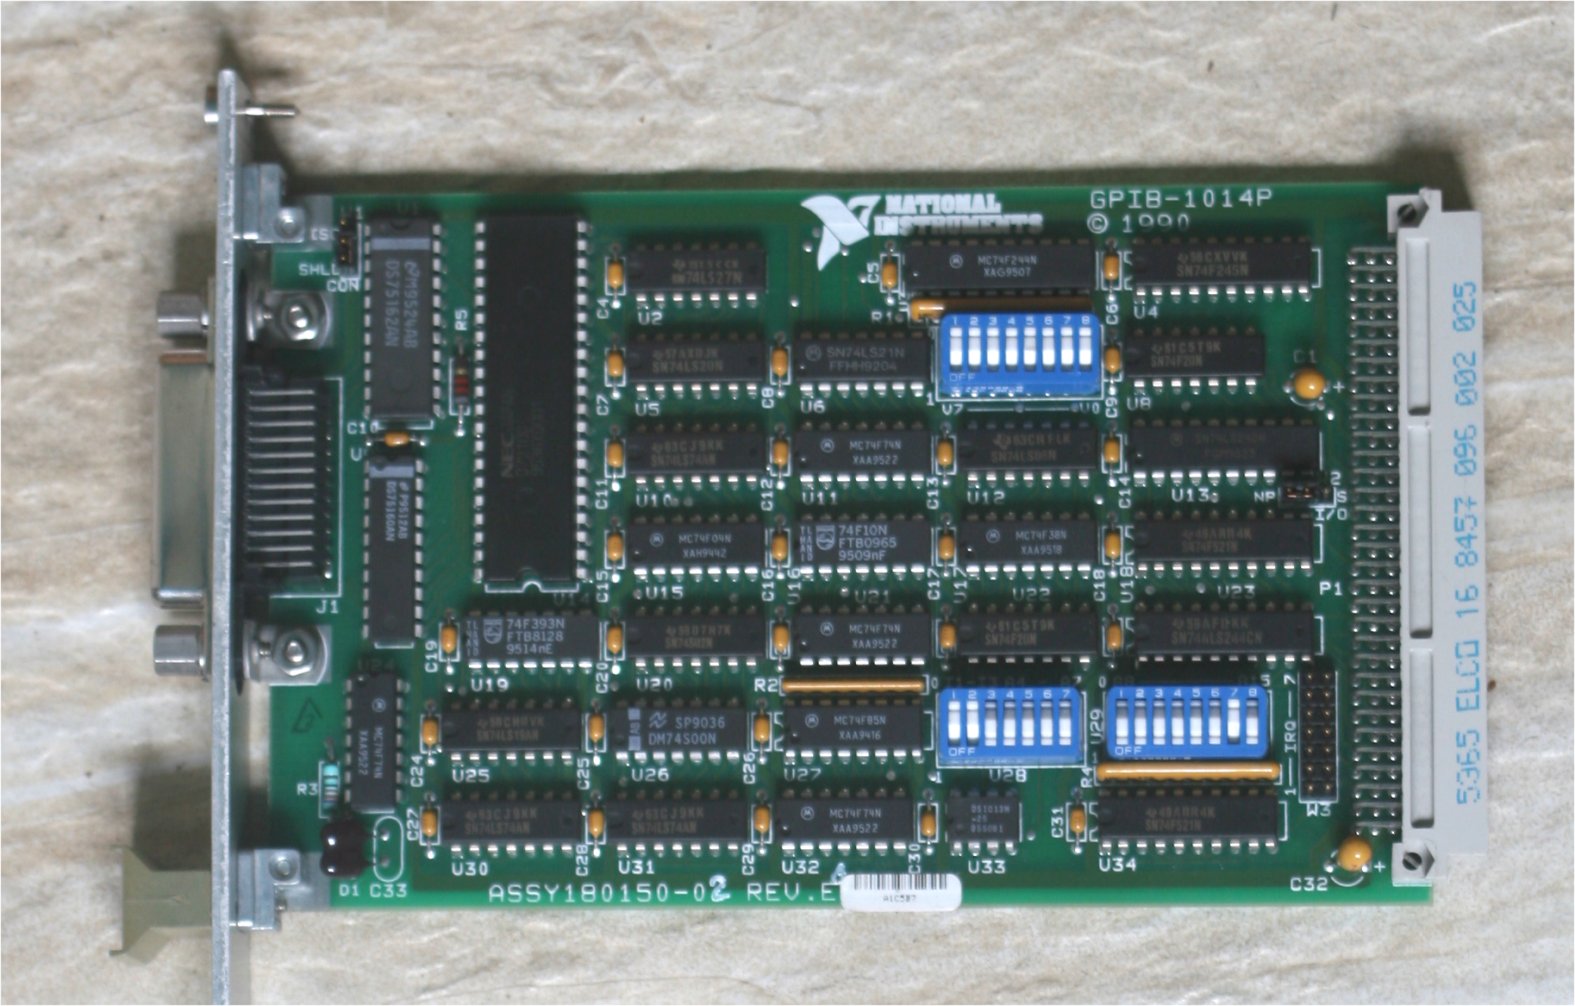 top view of NI 1014P GPIB interface board